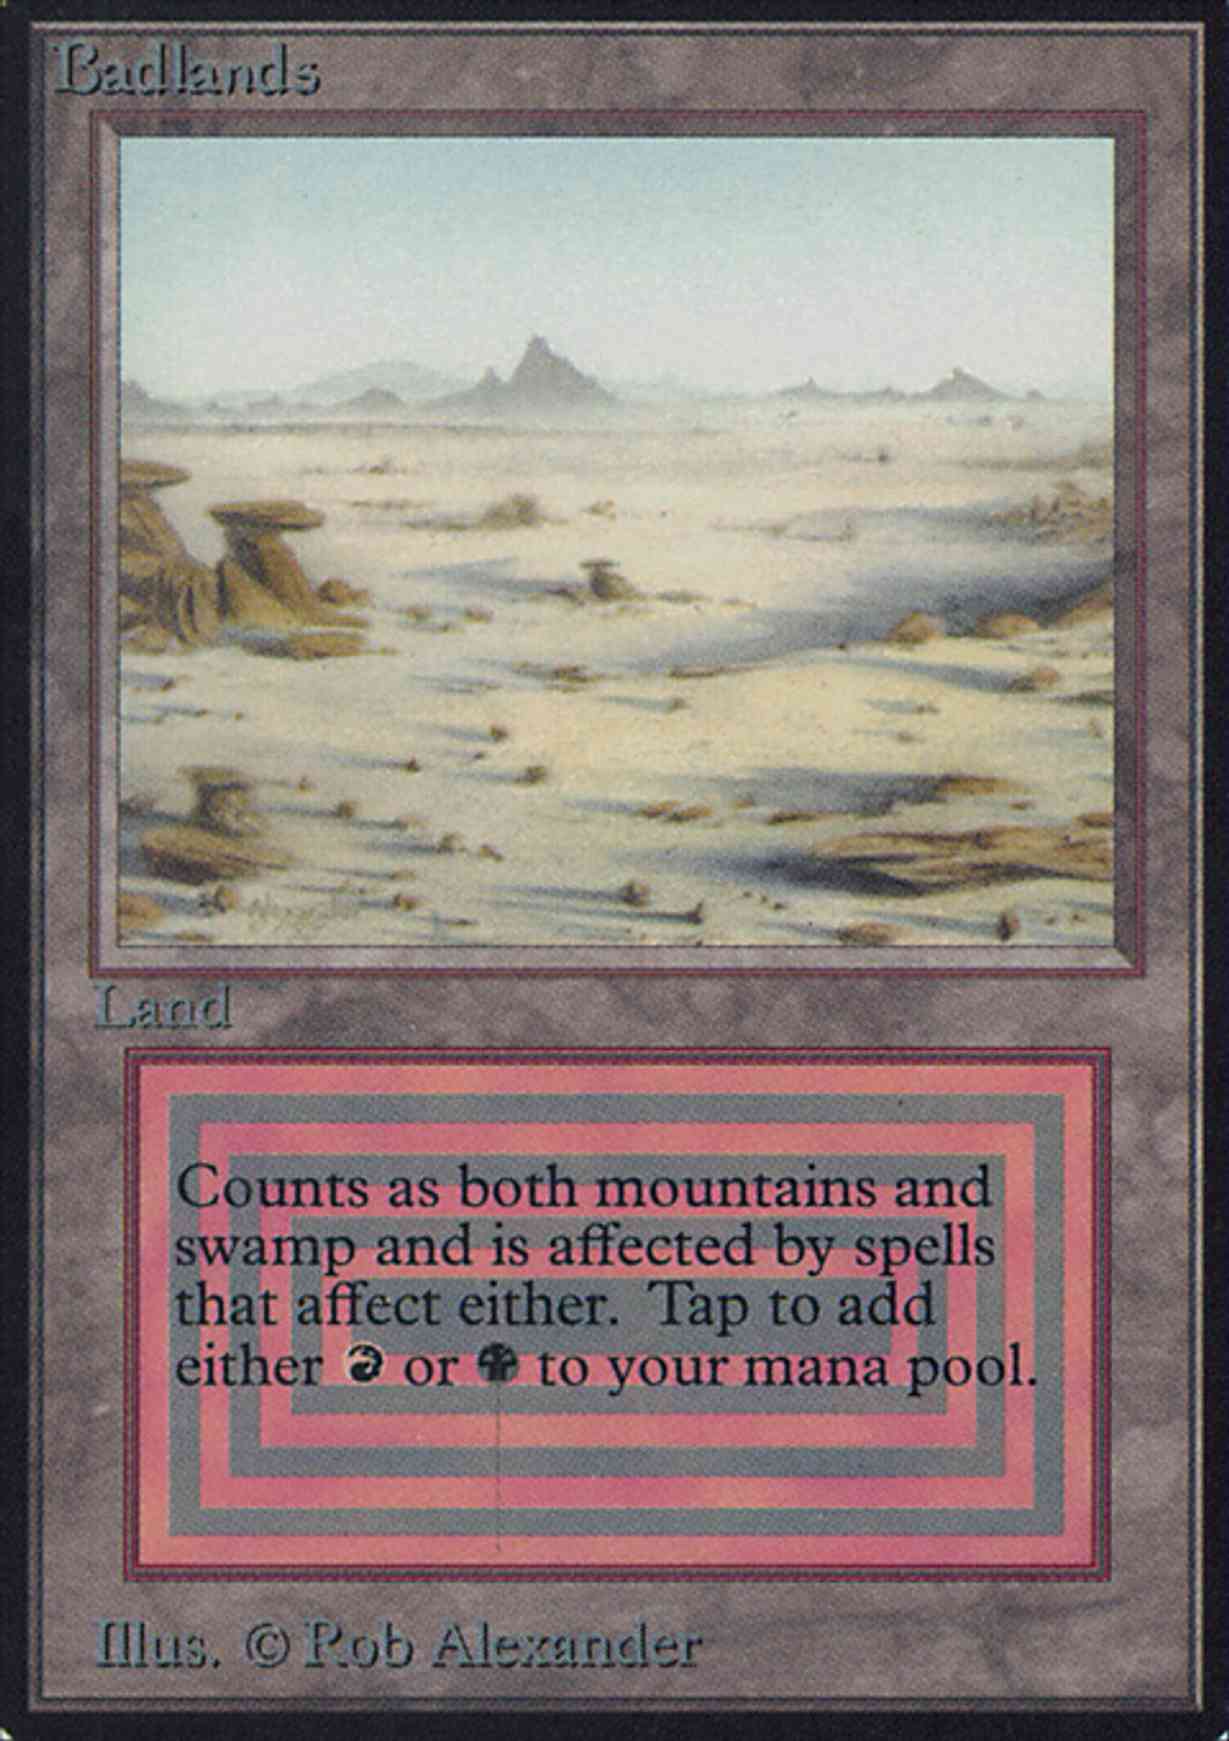 Badlands magic card front